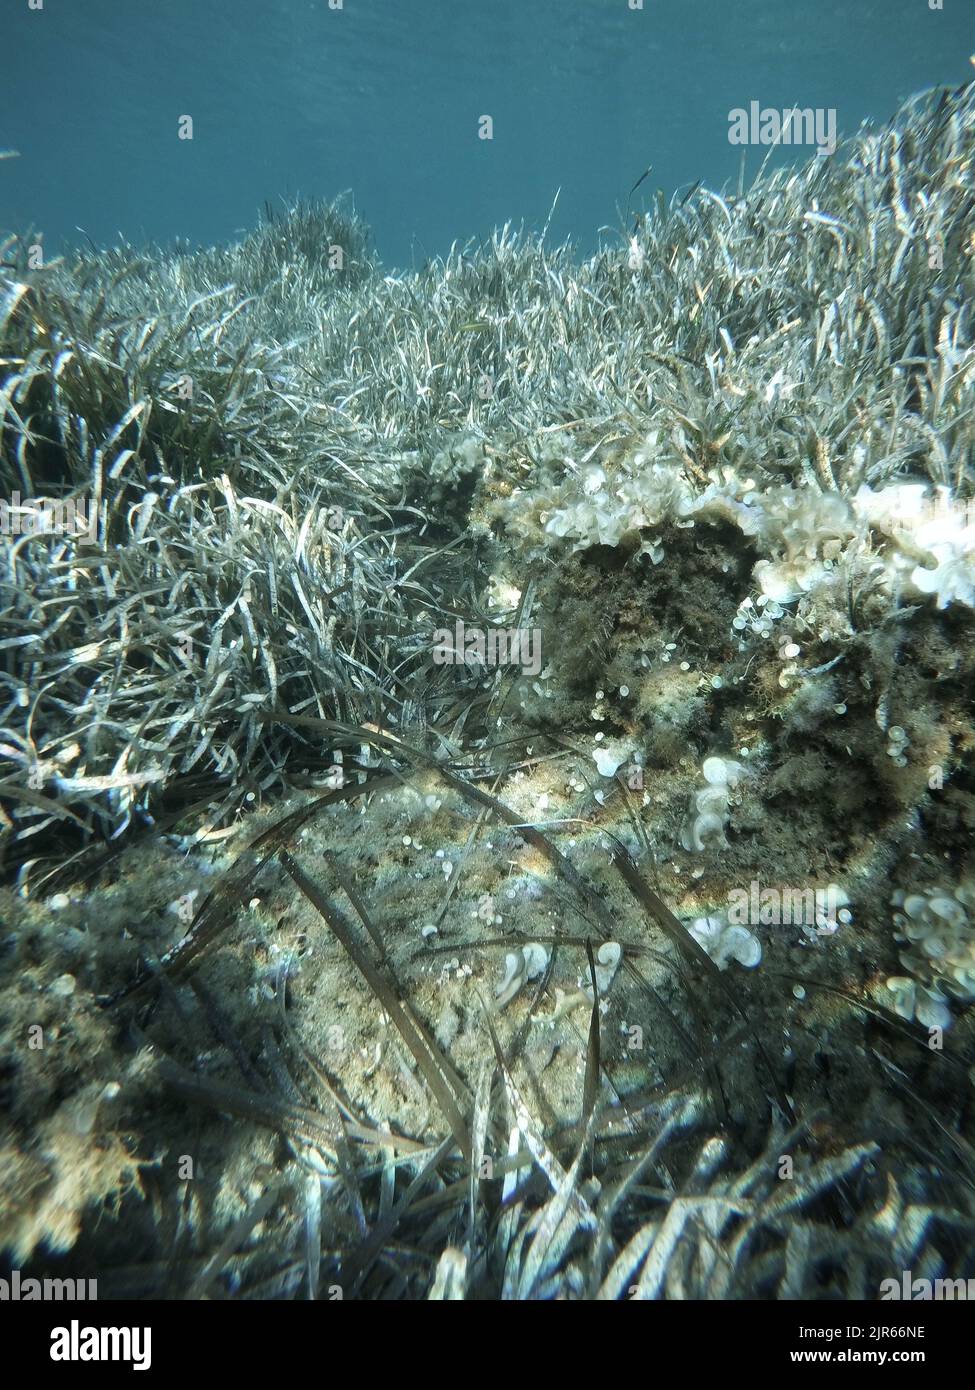 underwater landscape of the Mediterranean Sea Stock Photo